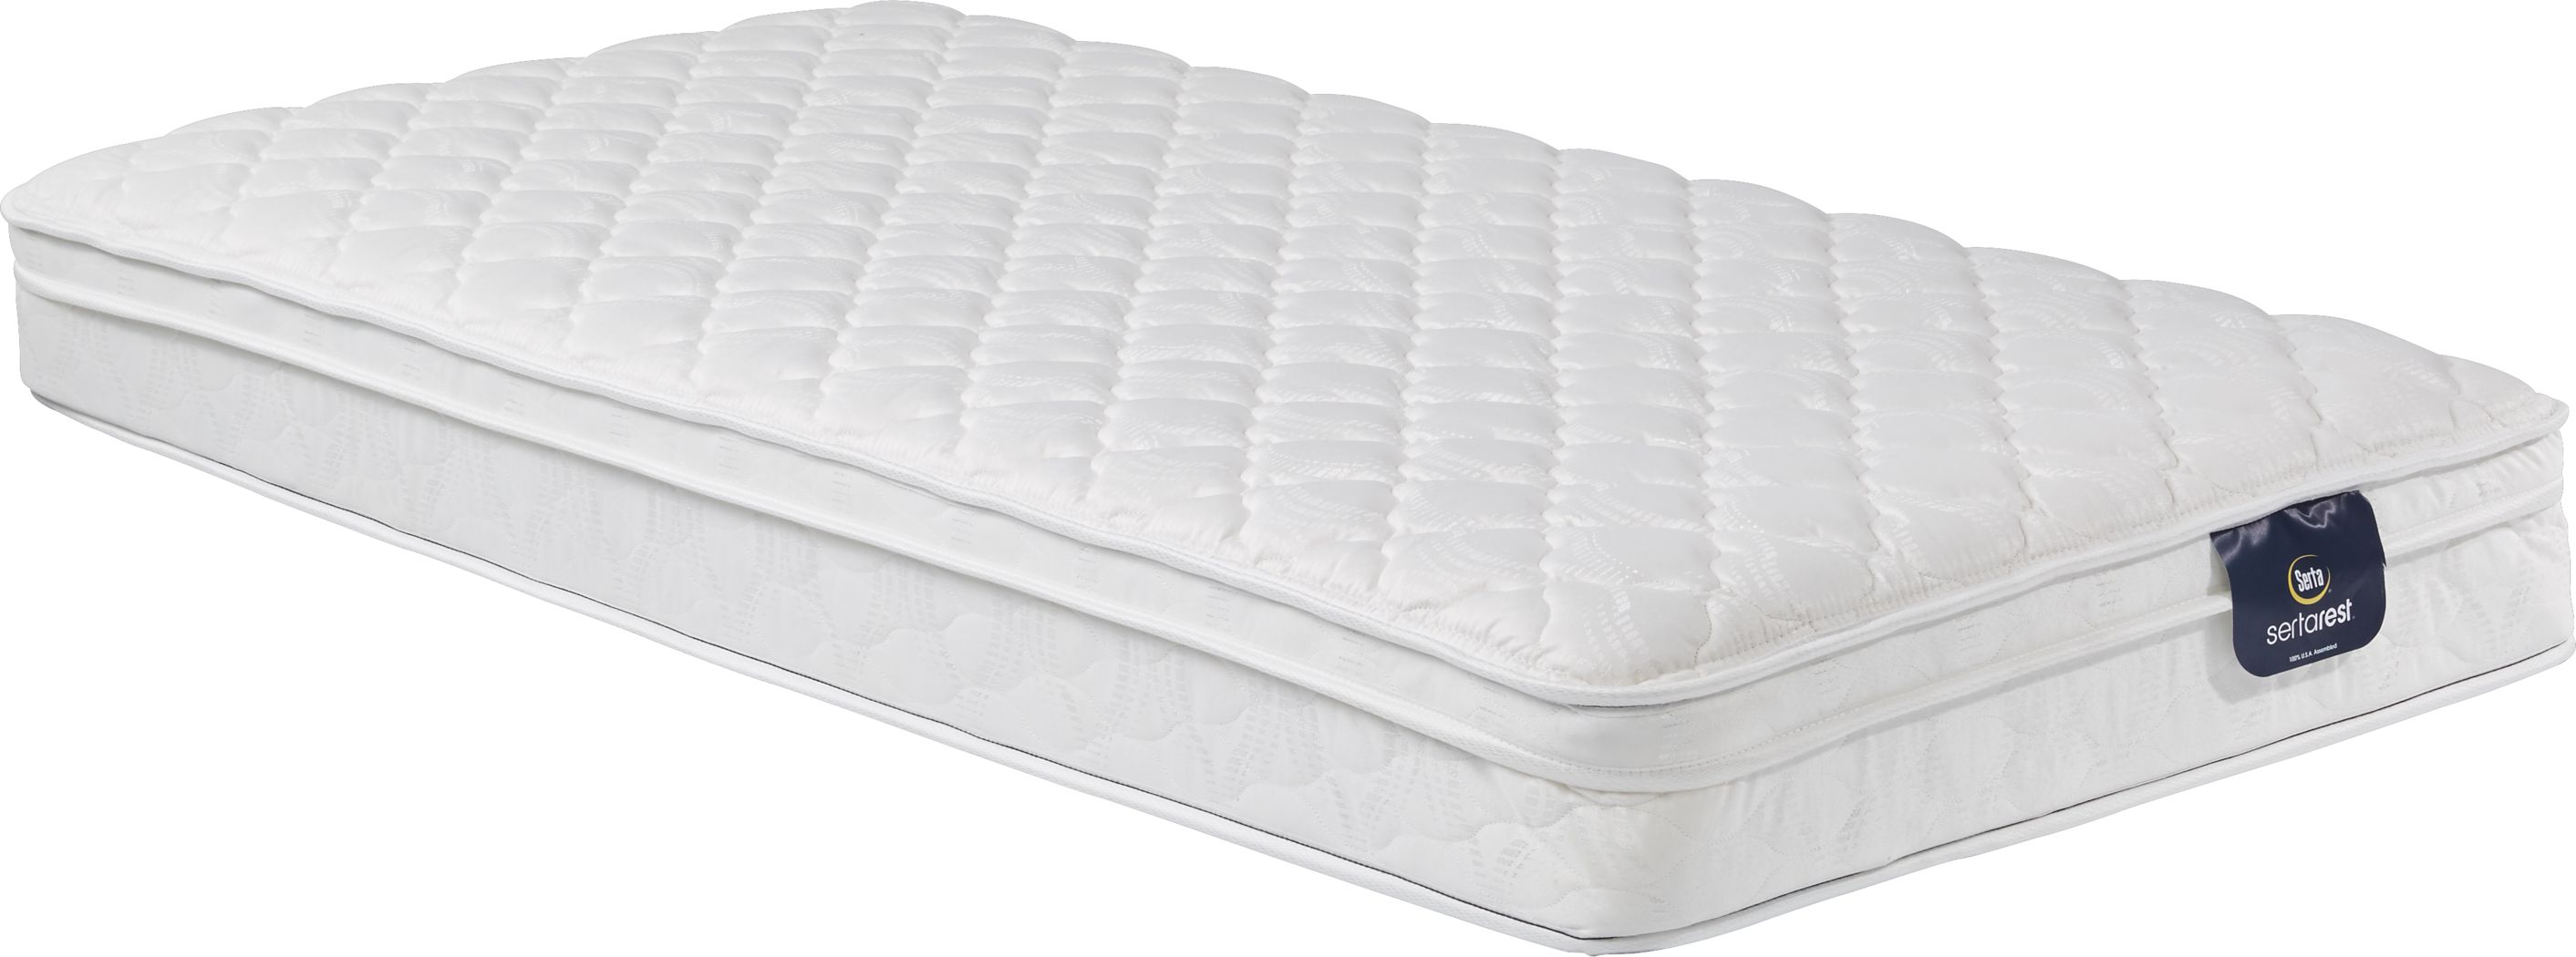 twin mattress by serta firmest